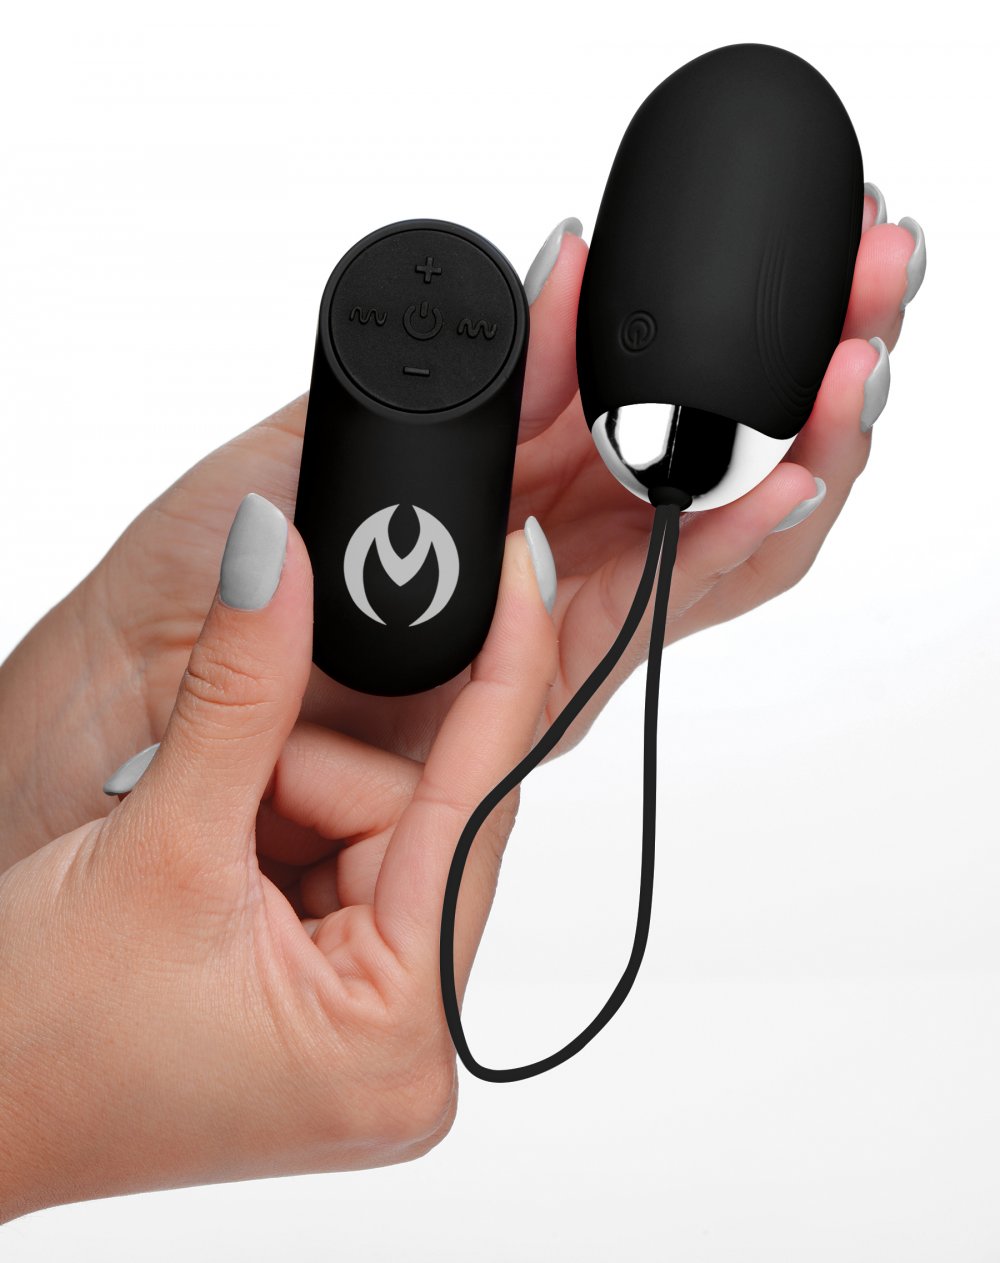 Master Series Thunder Egg - Black USB Rechargable Egg with Wireless Remote